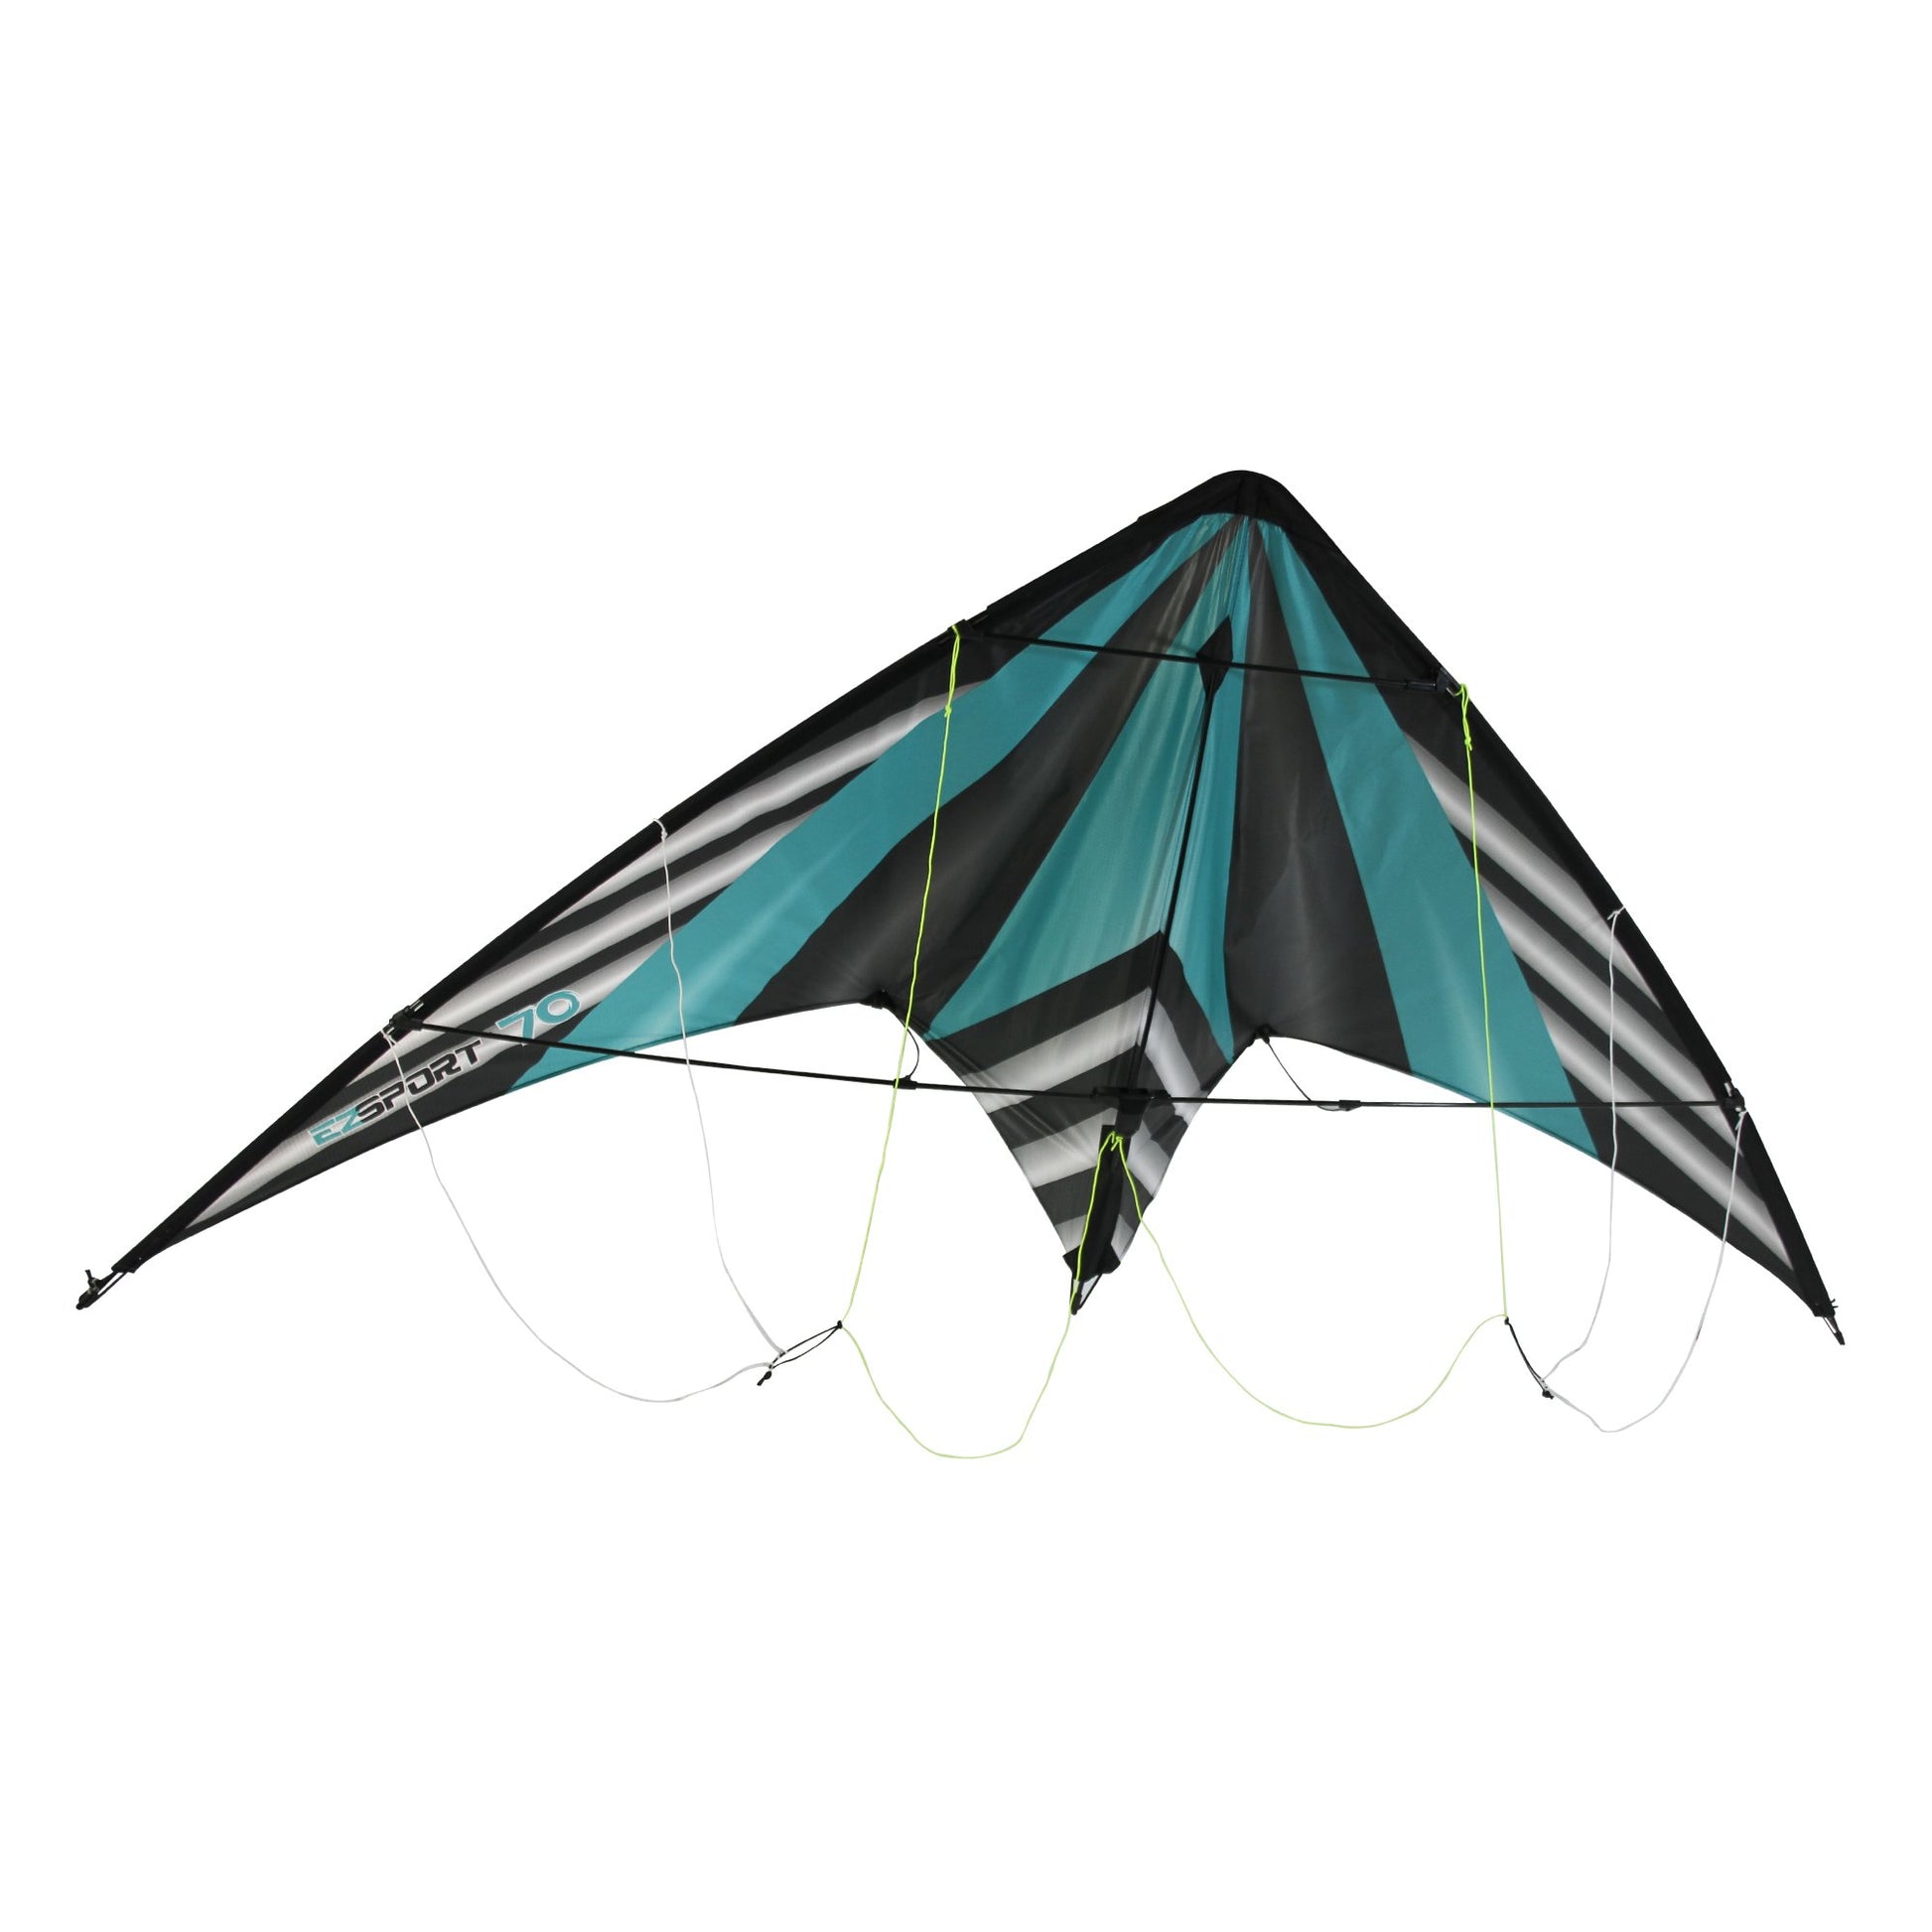 WindNSun EZ Sport 70 Dual Control Sport Kite Teal Stripe Nylon Kite Product Image